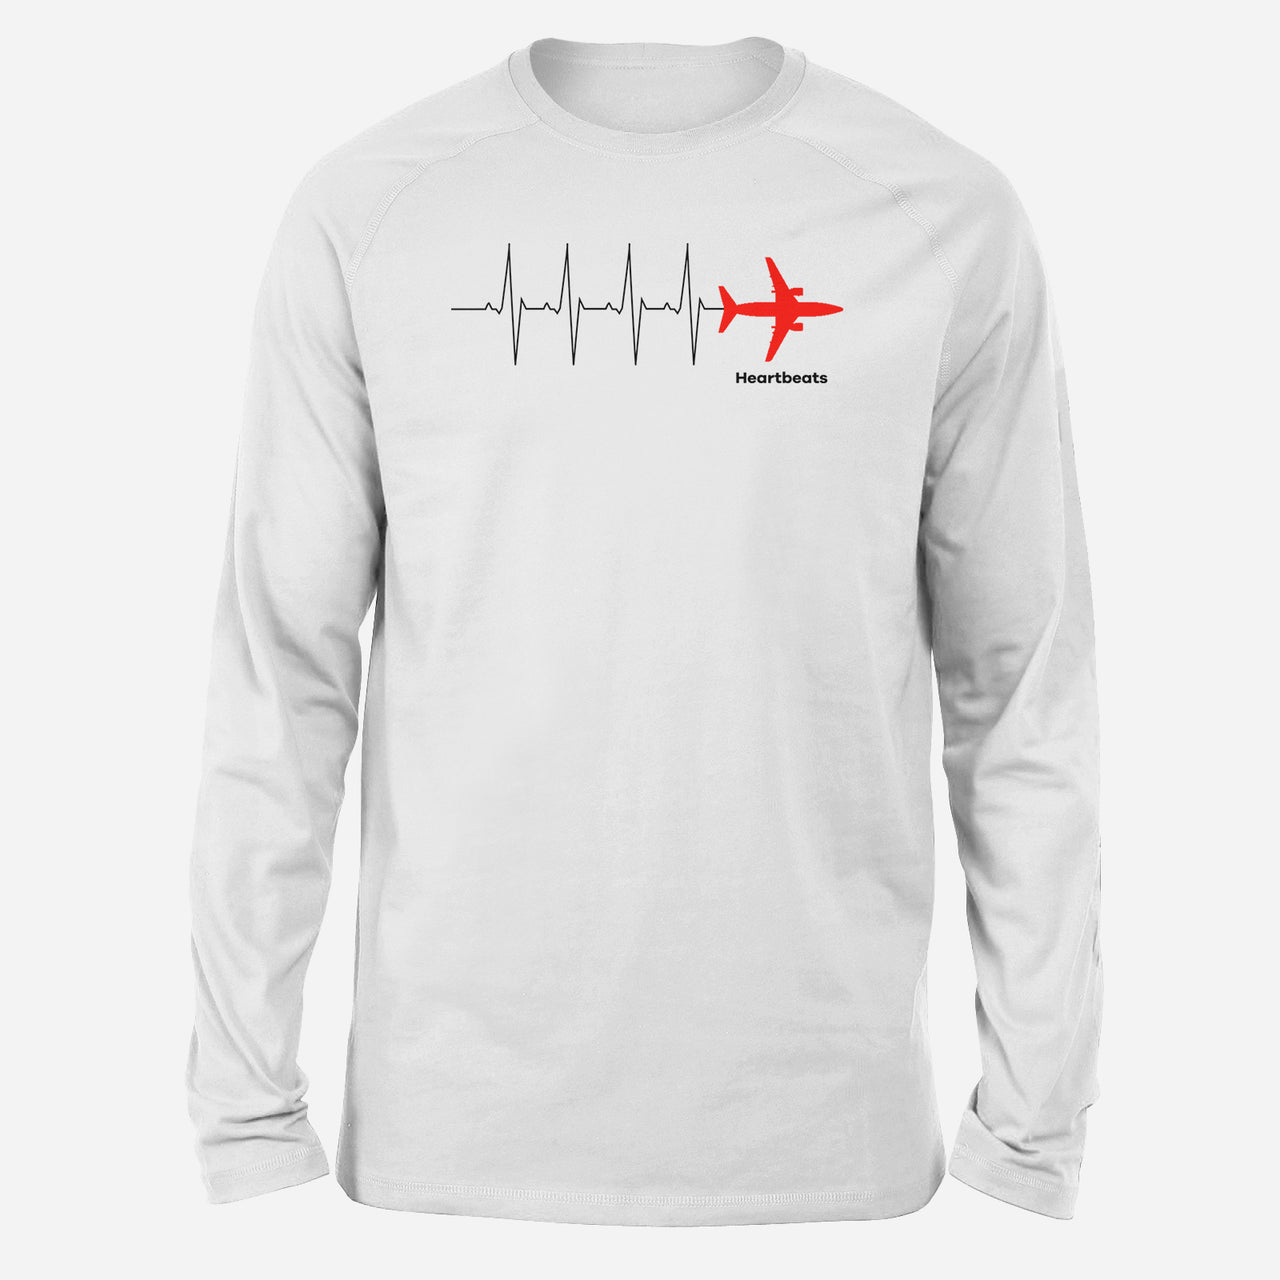 Aviation Heartbeats Designed Long-Sleeve T-Shirts